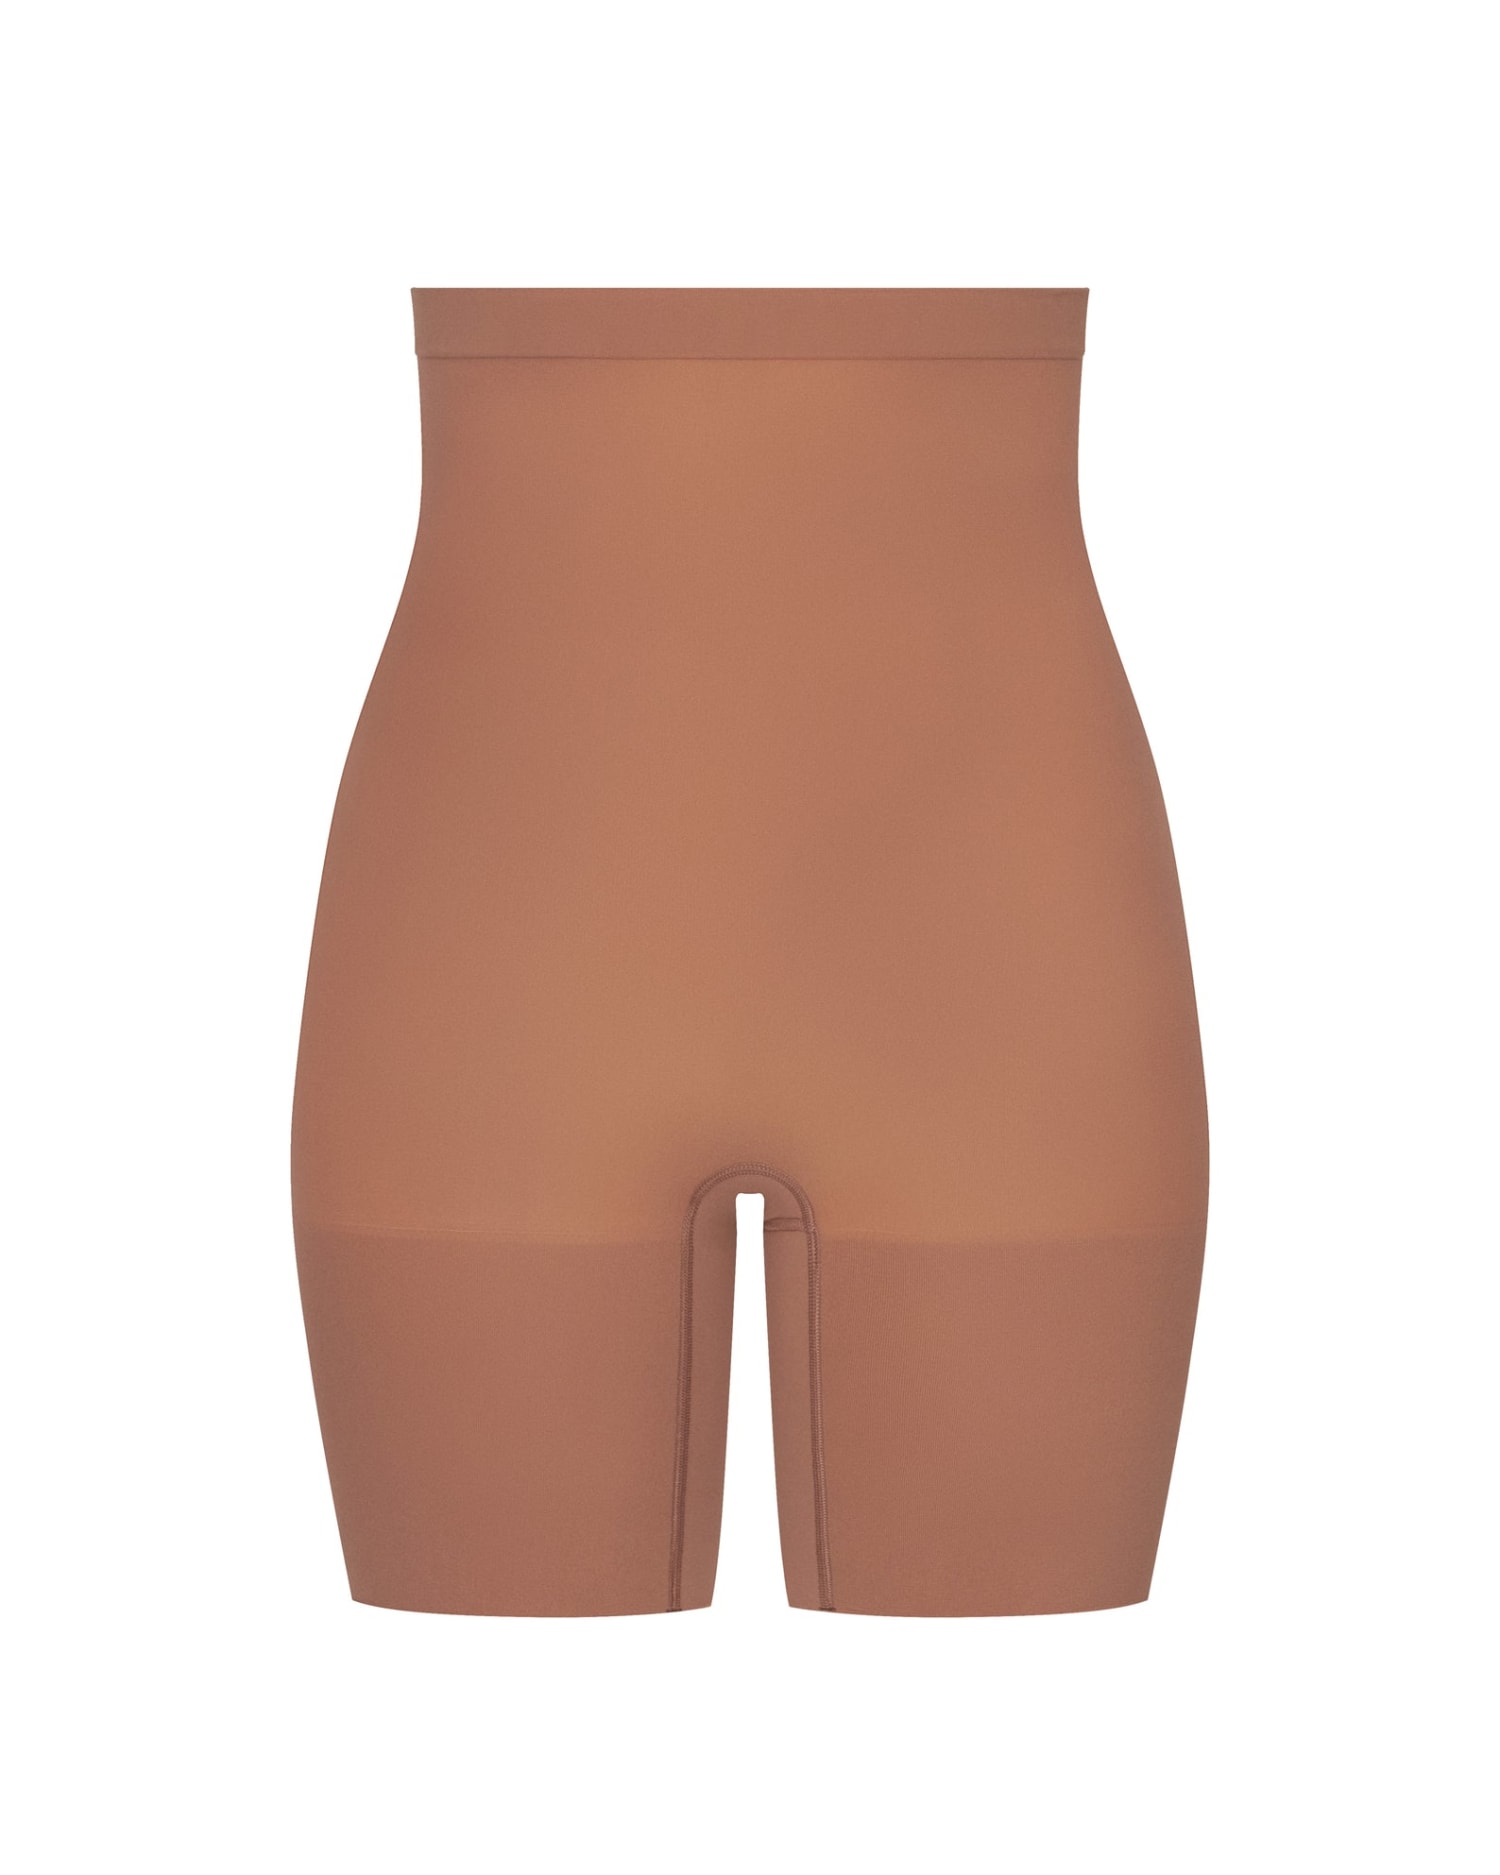 MOVWIN Tummy Control Body Shaper Shorts - High Waist Thigh Slimmer